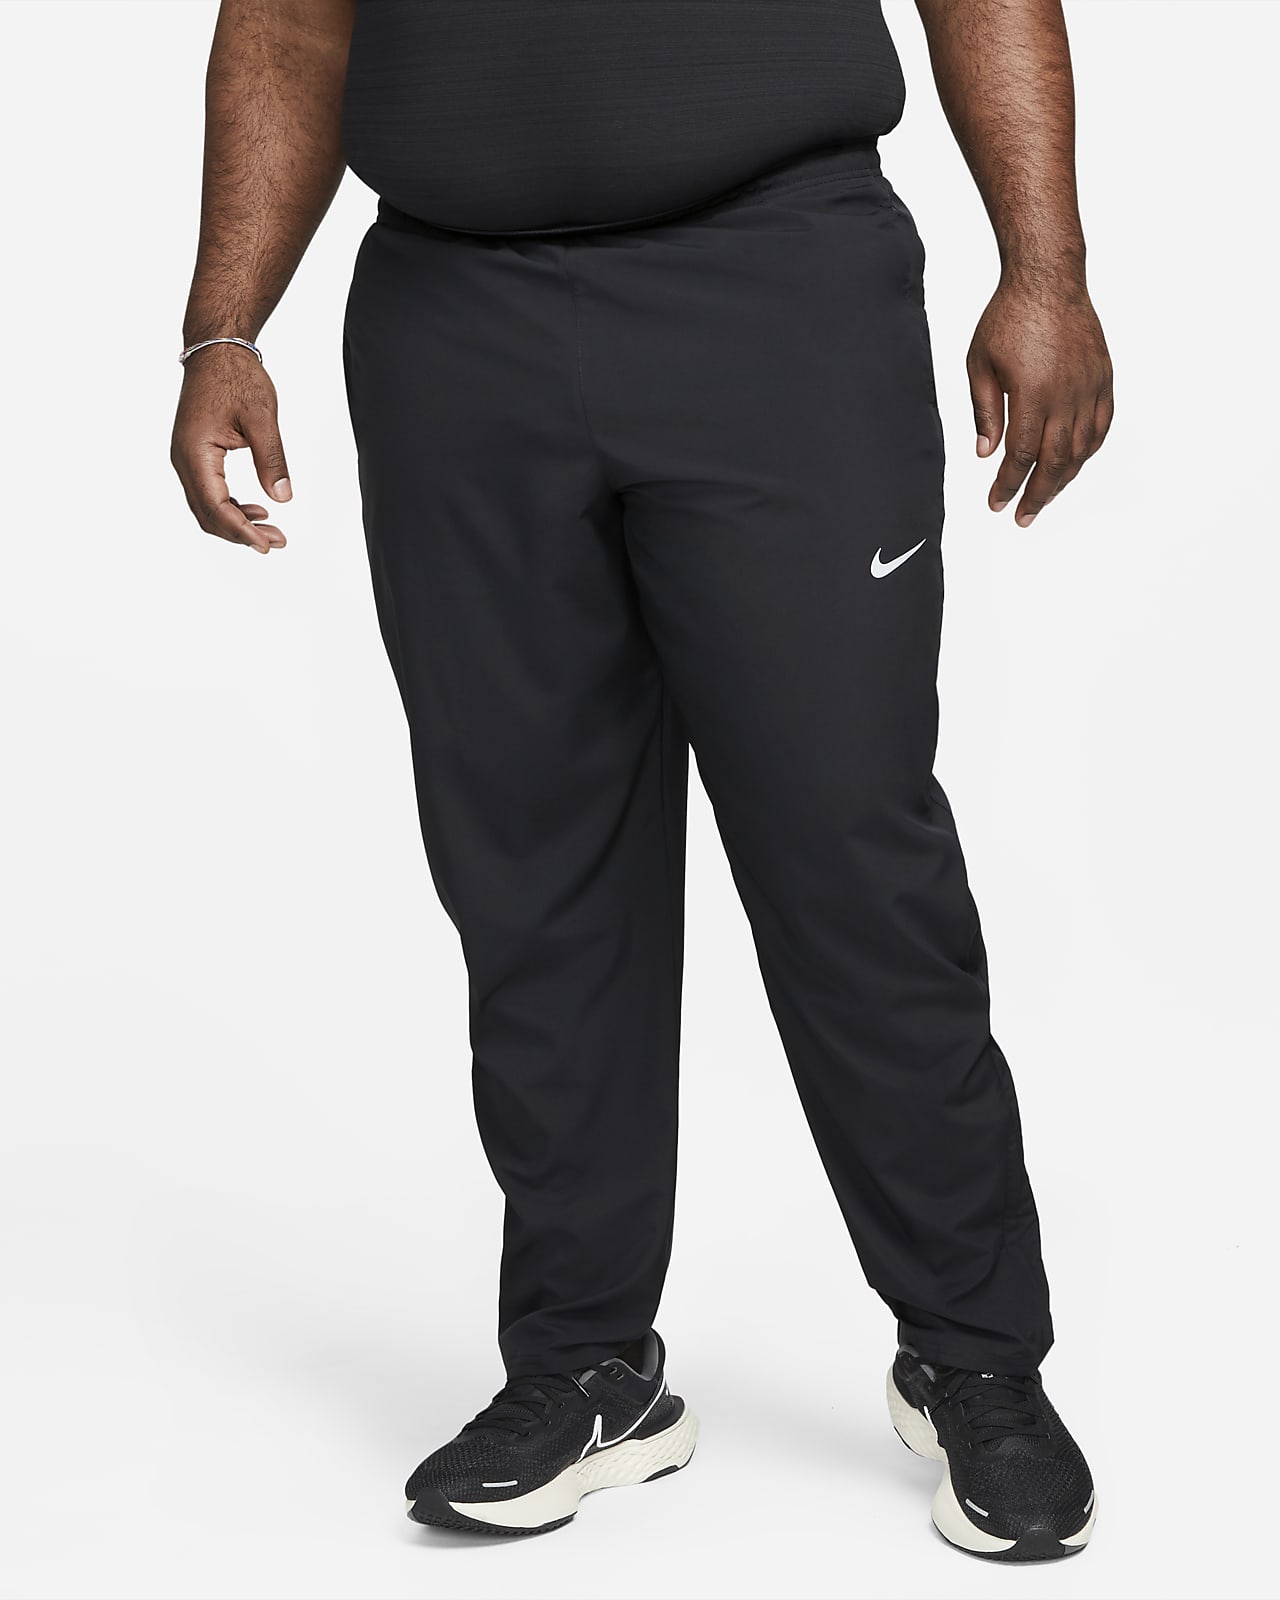 Nike  Academy Track Pants Adults  Performance Tracksuit Bottoms   SportsDirectcom